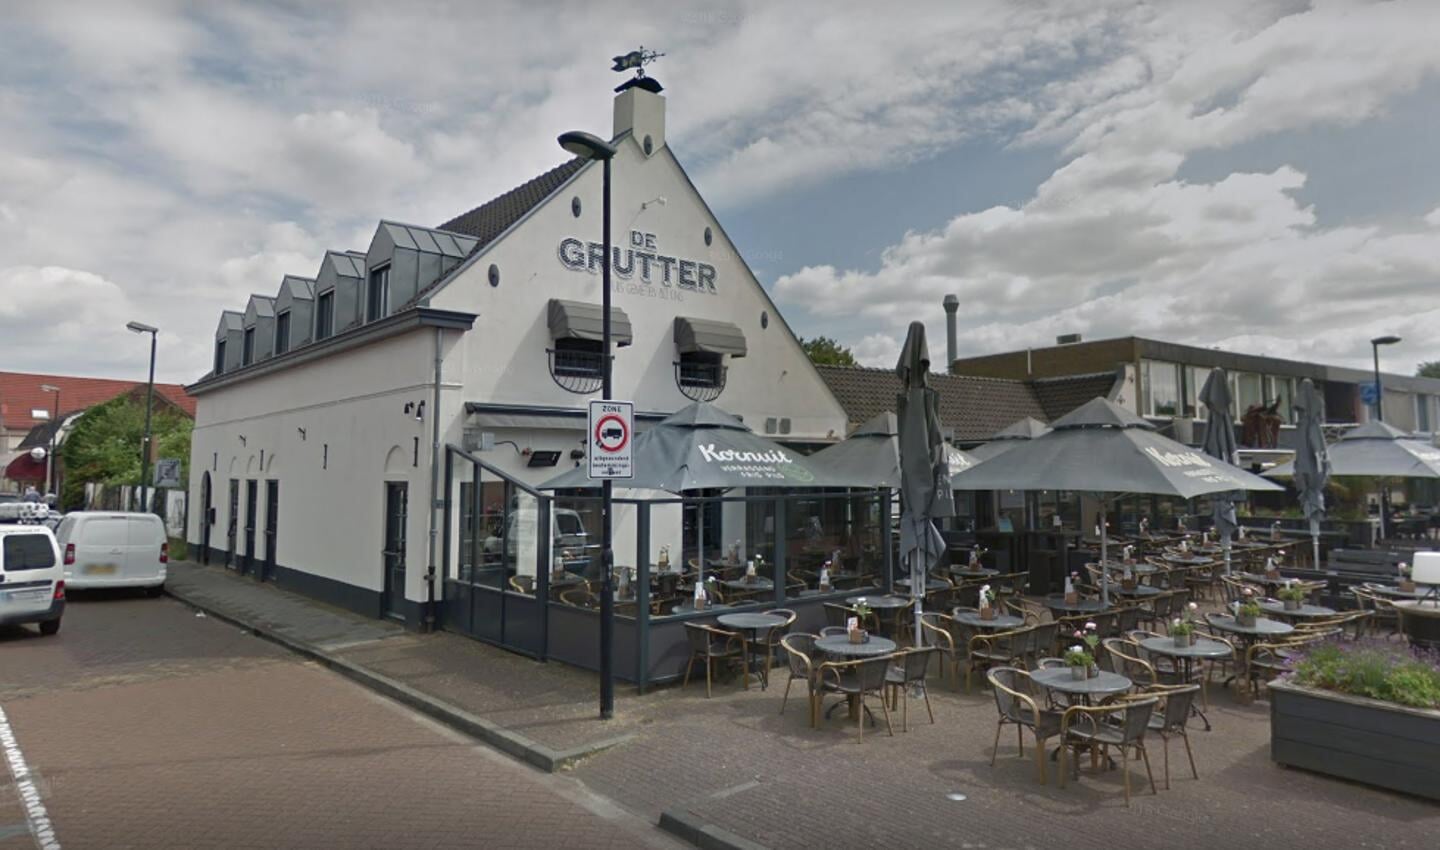 Restaurant De Grutter in Asten. (Bron: Google Street View)